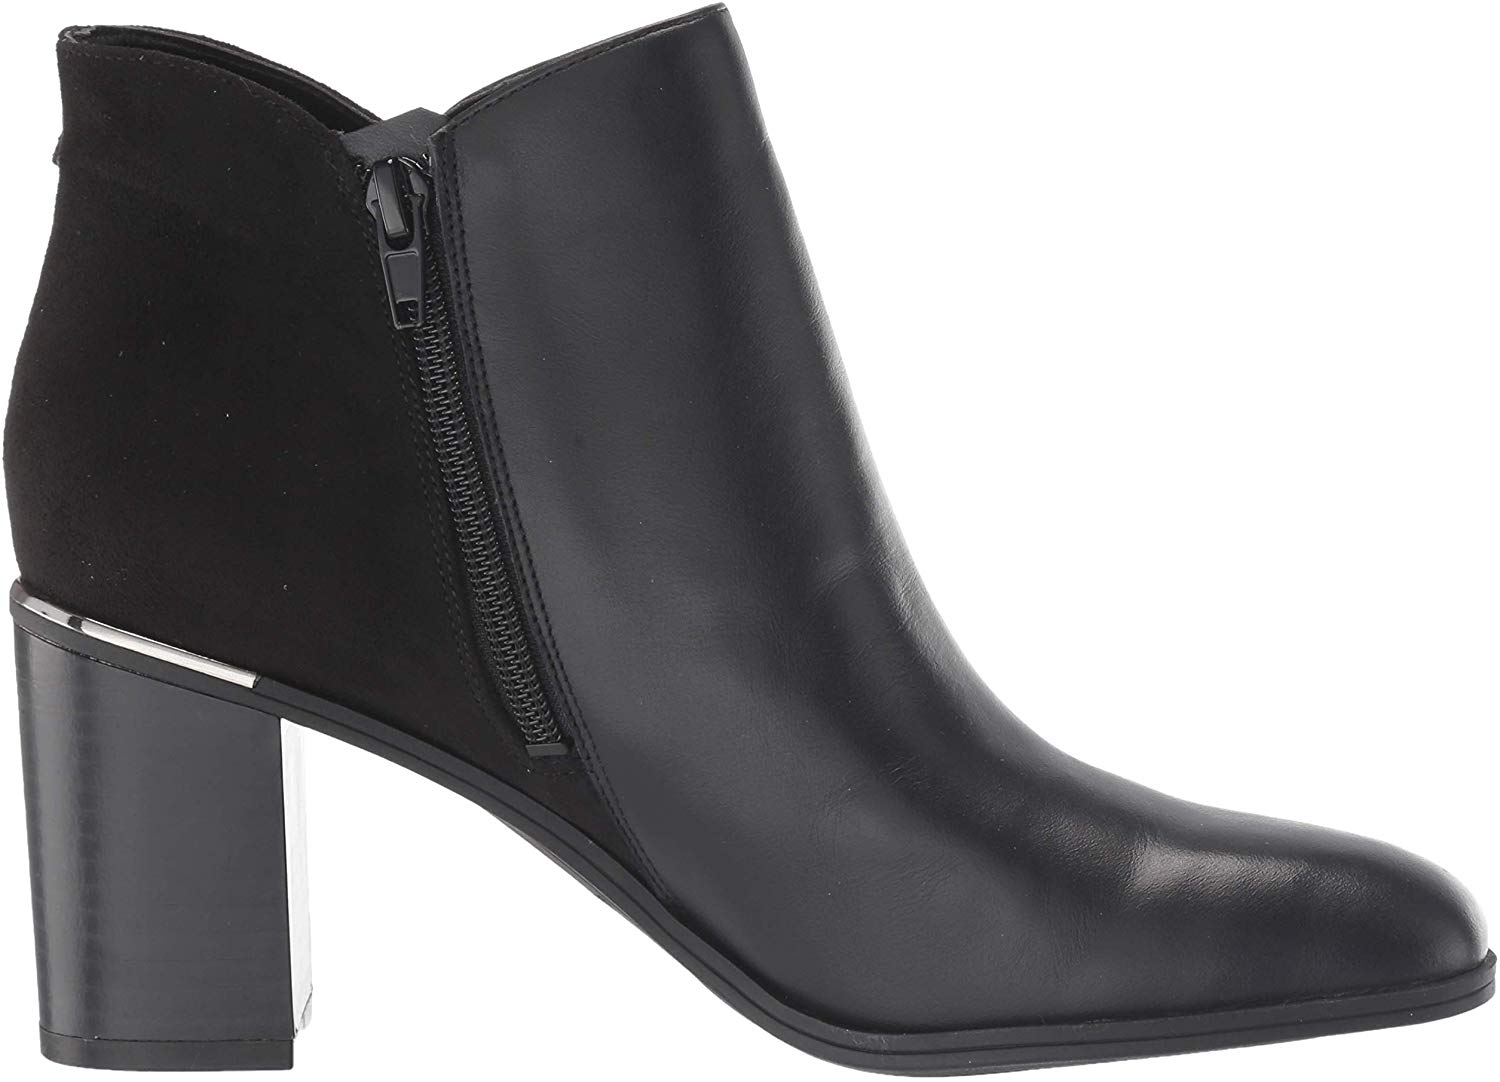 Bandolino Footwear Women's Orelia Ankle Boot, Black, Size 8.0 fpHU | eBay